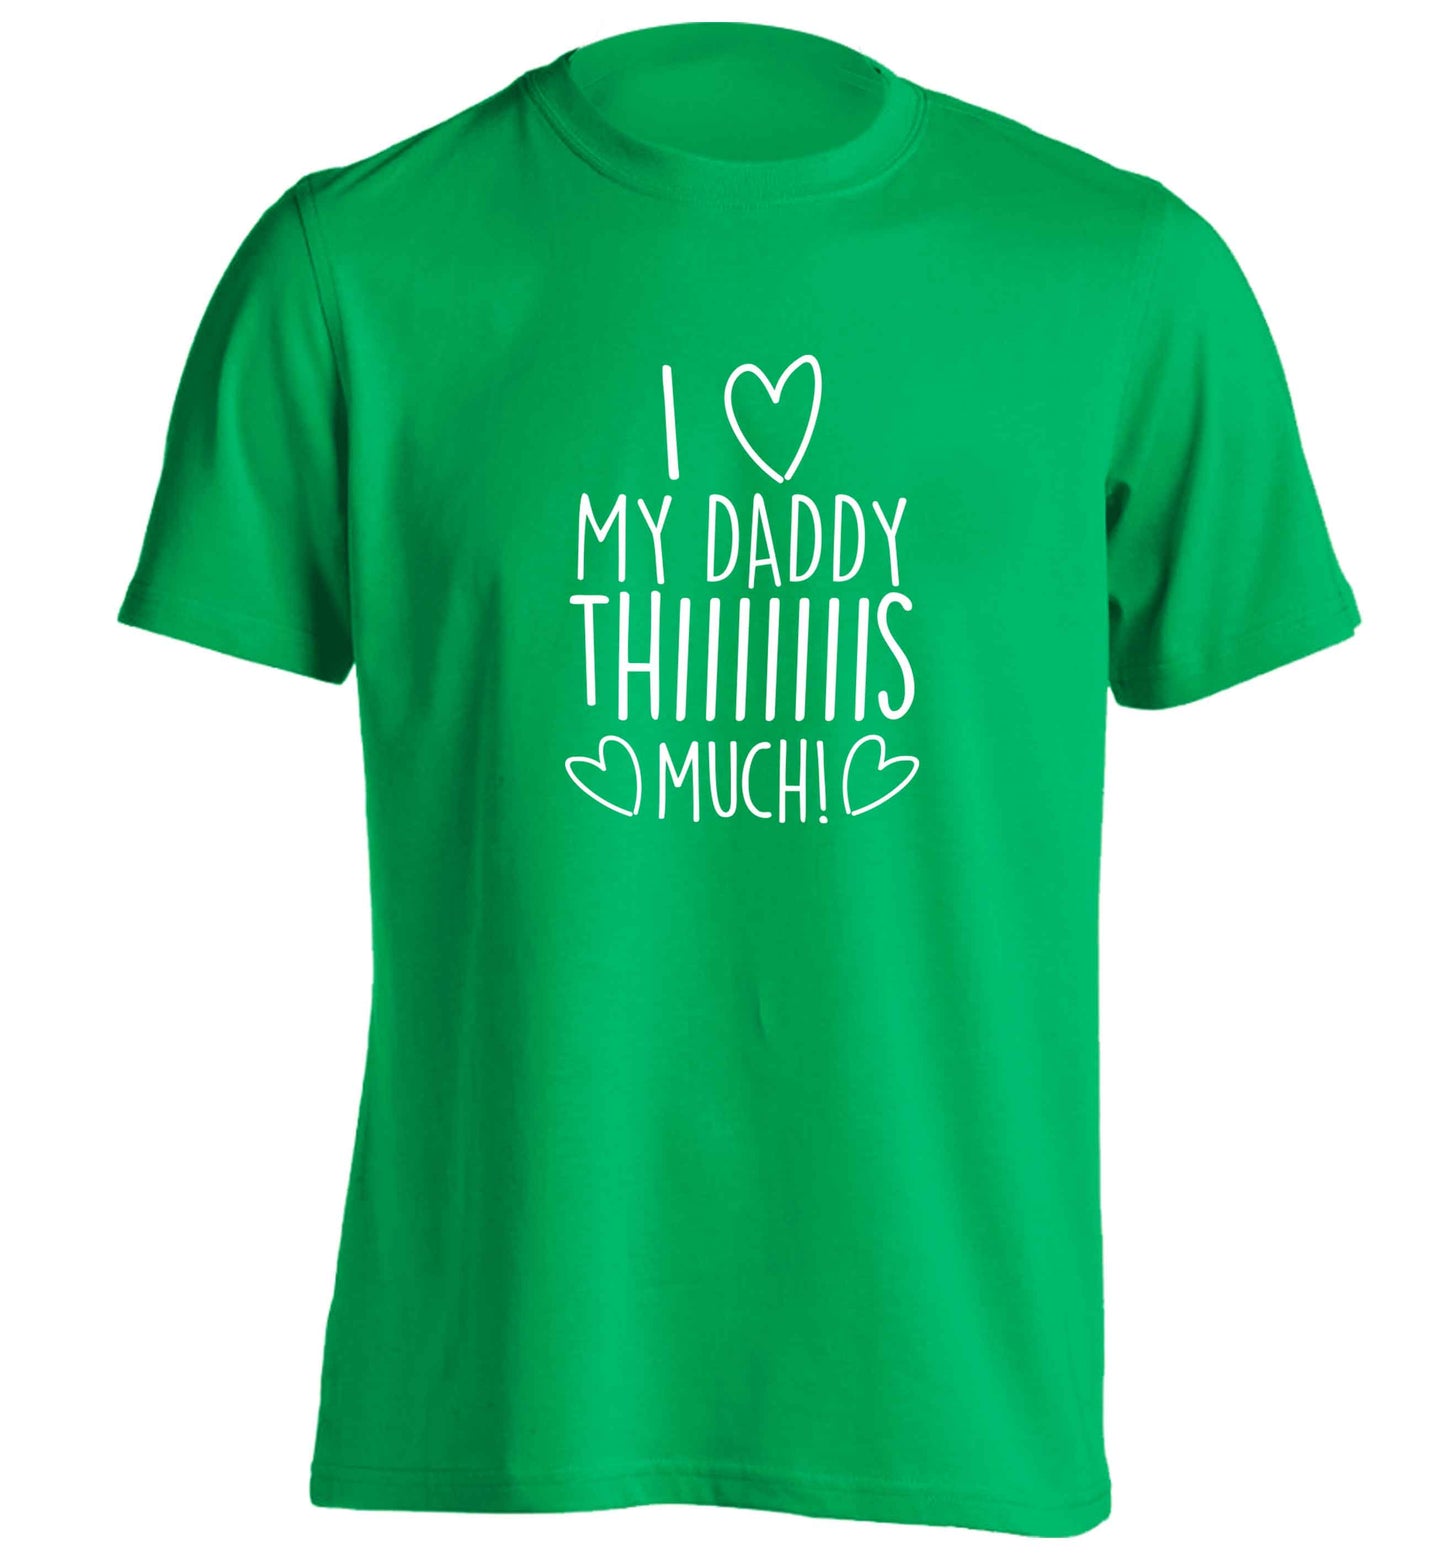 I love my daddy thiiiiis much! adults unisex green Tshirt 2XL